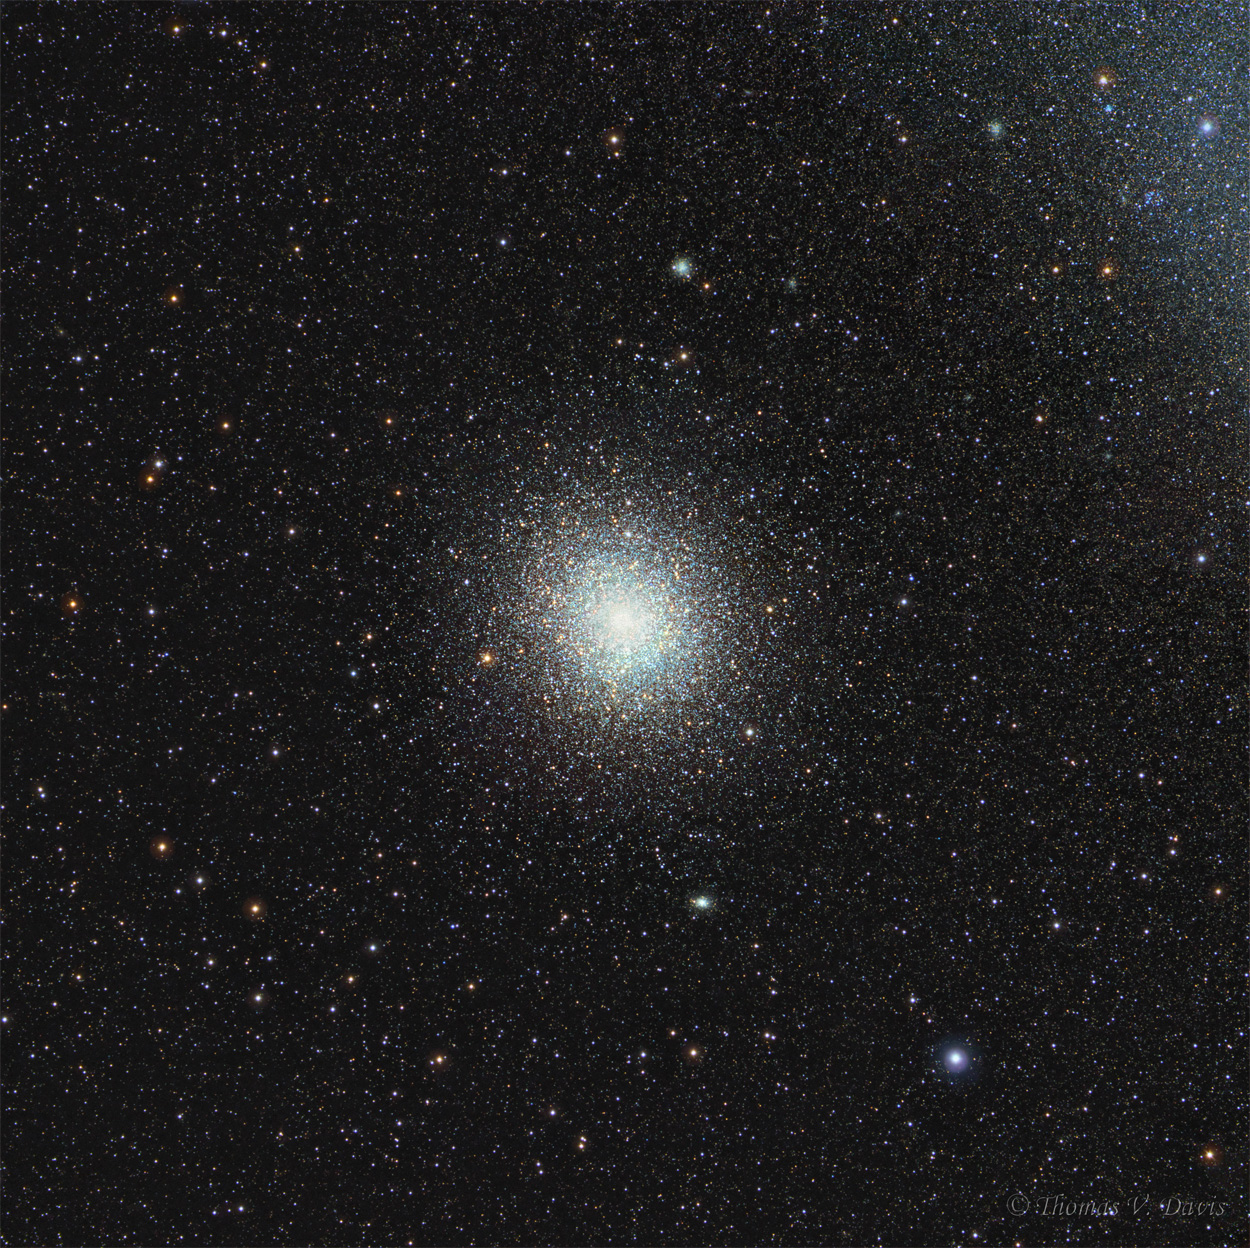 47 Tuc: A Great Globular Cluster of Stars